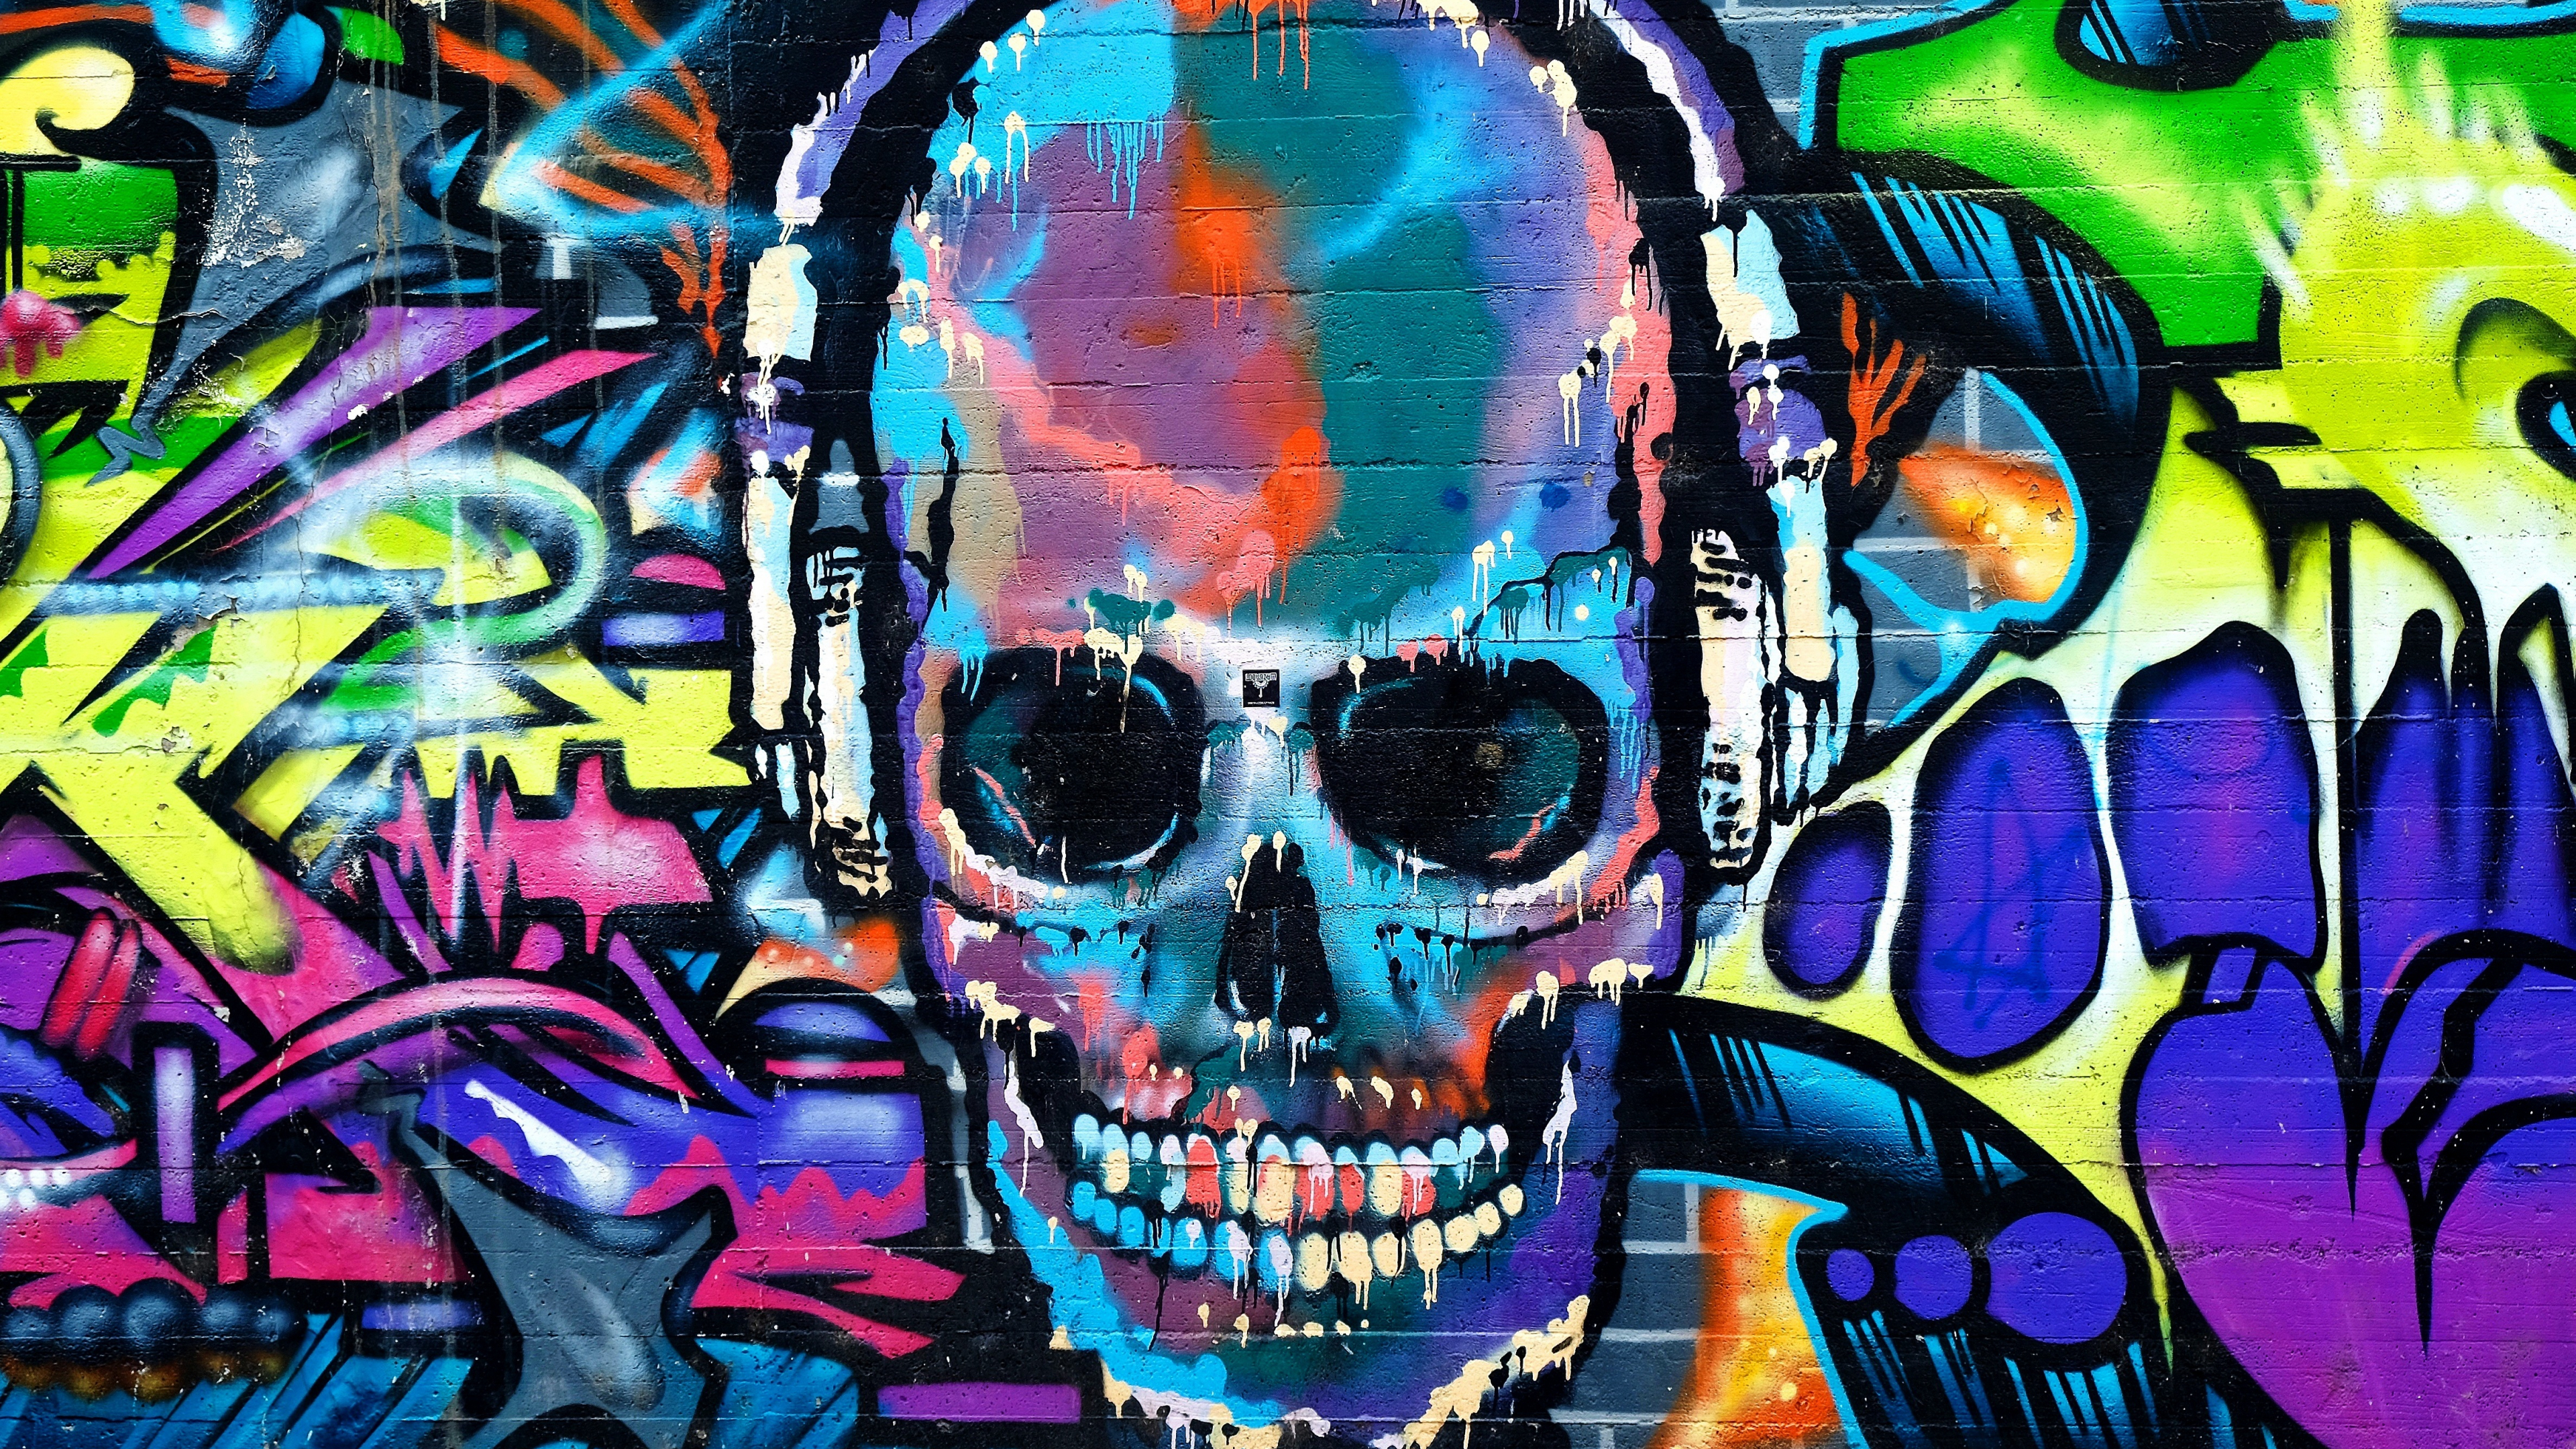 Skull Graffiti Wallpaper 4k Graffiti ultra hd desktop background wallpapers for 4k 8k uhd tv. skull graffiti wallpaper 4k